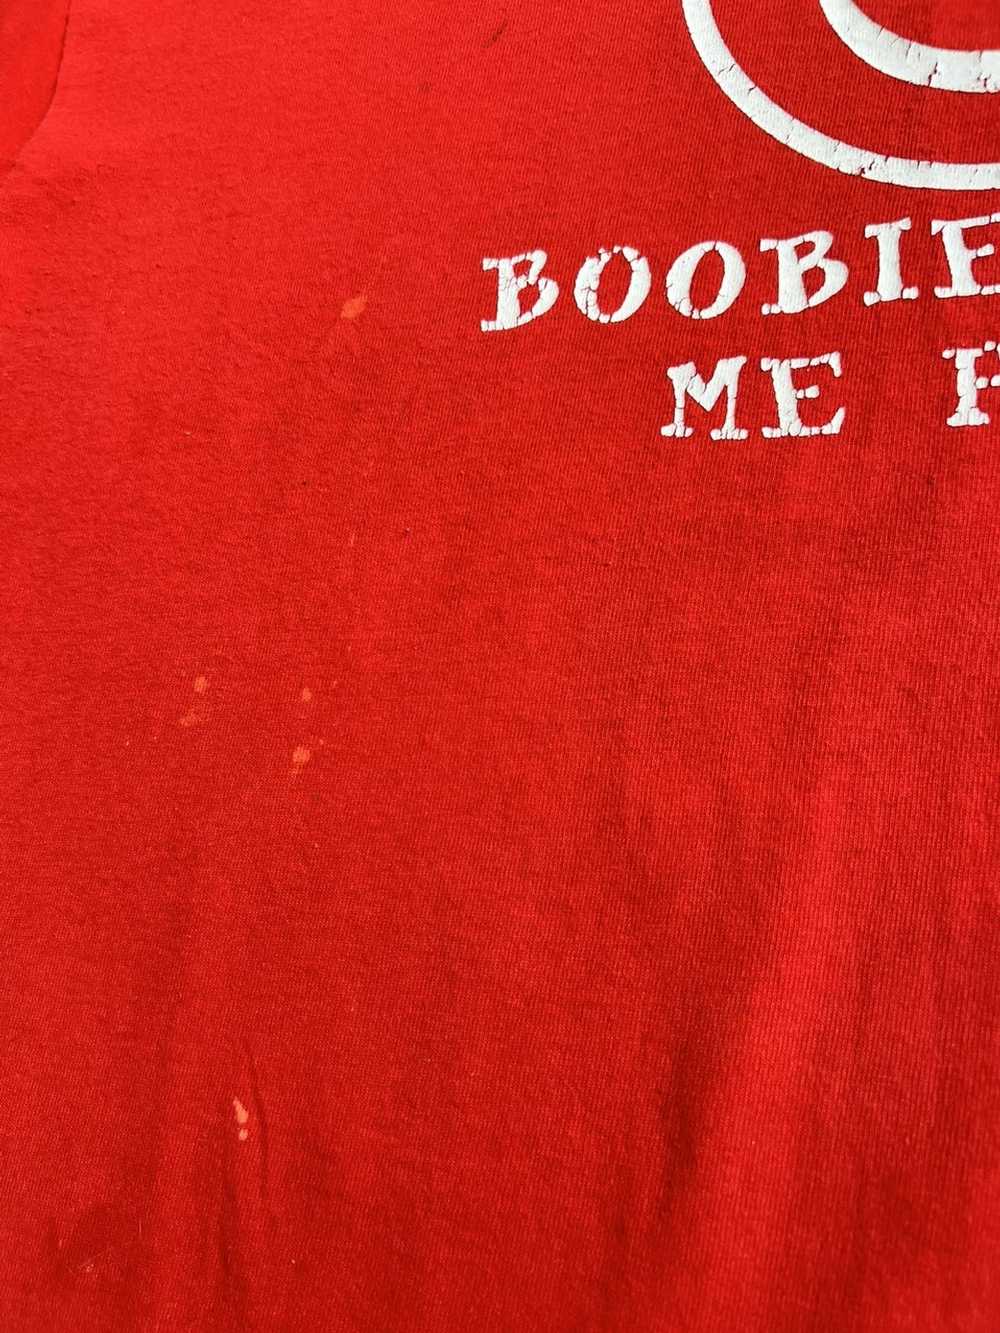 Vintage Vintage Boobies Make Me Happy Smiley Shirt - image 4